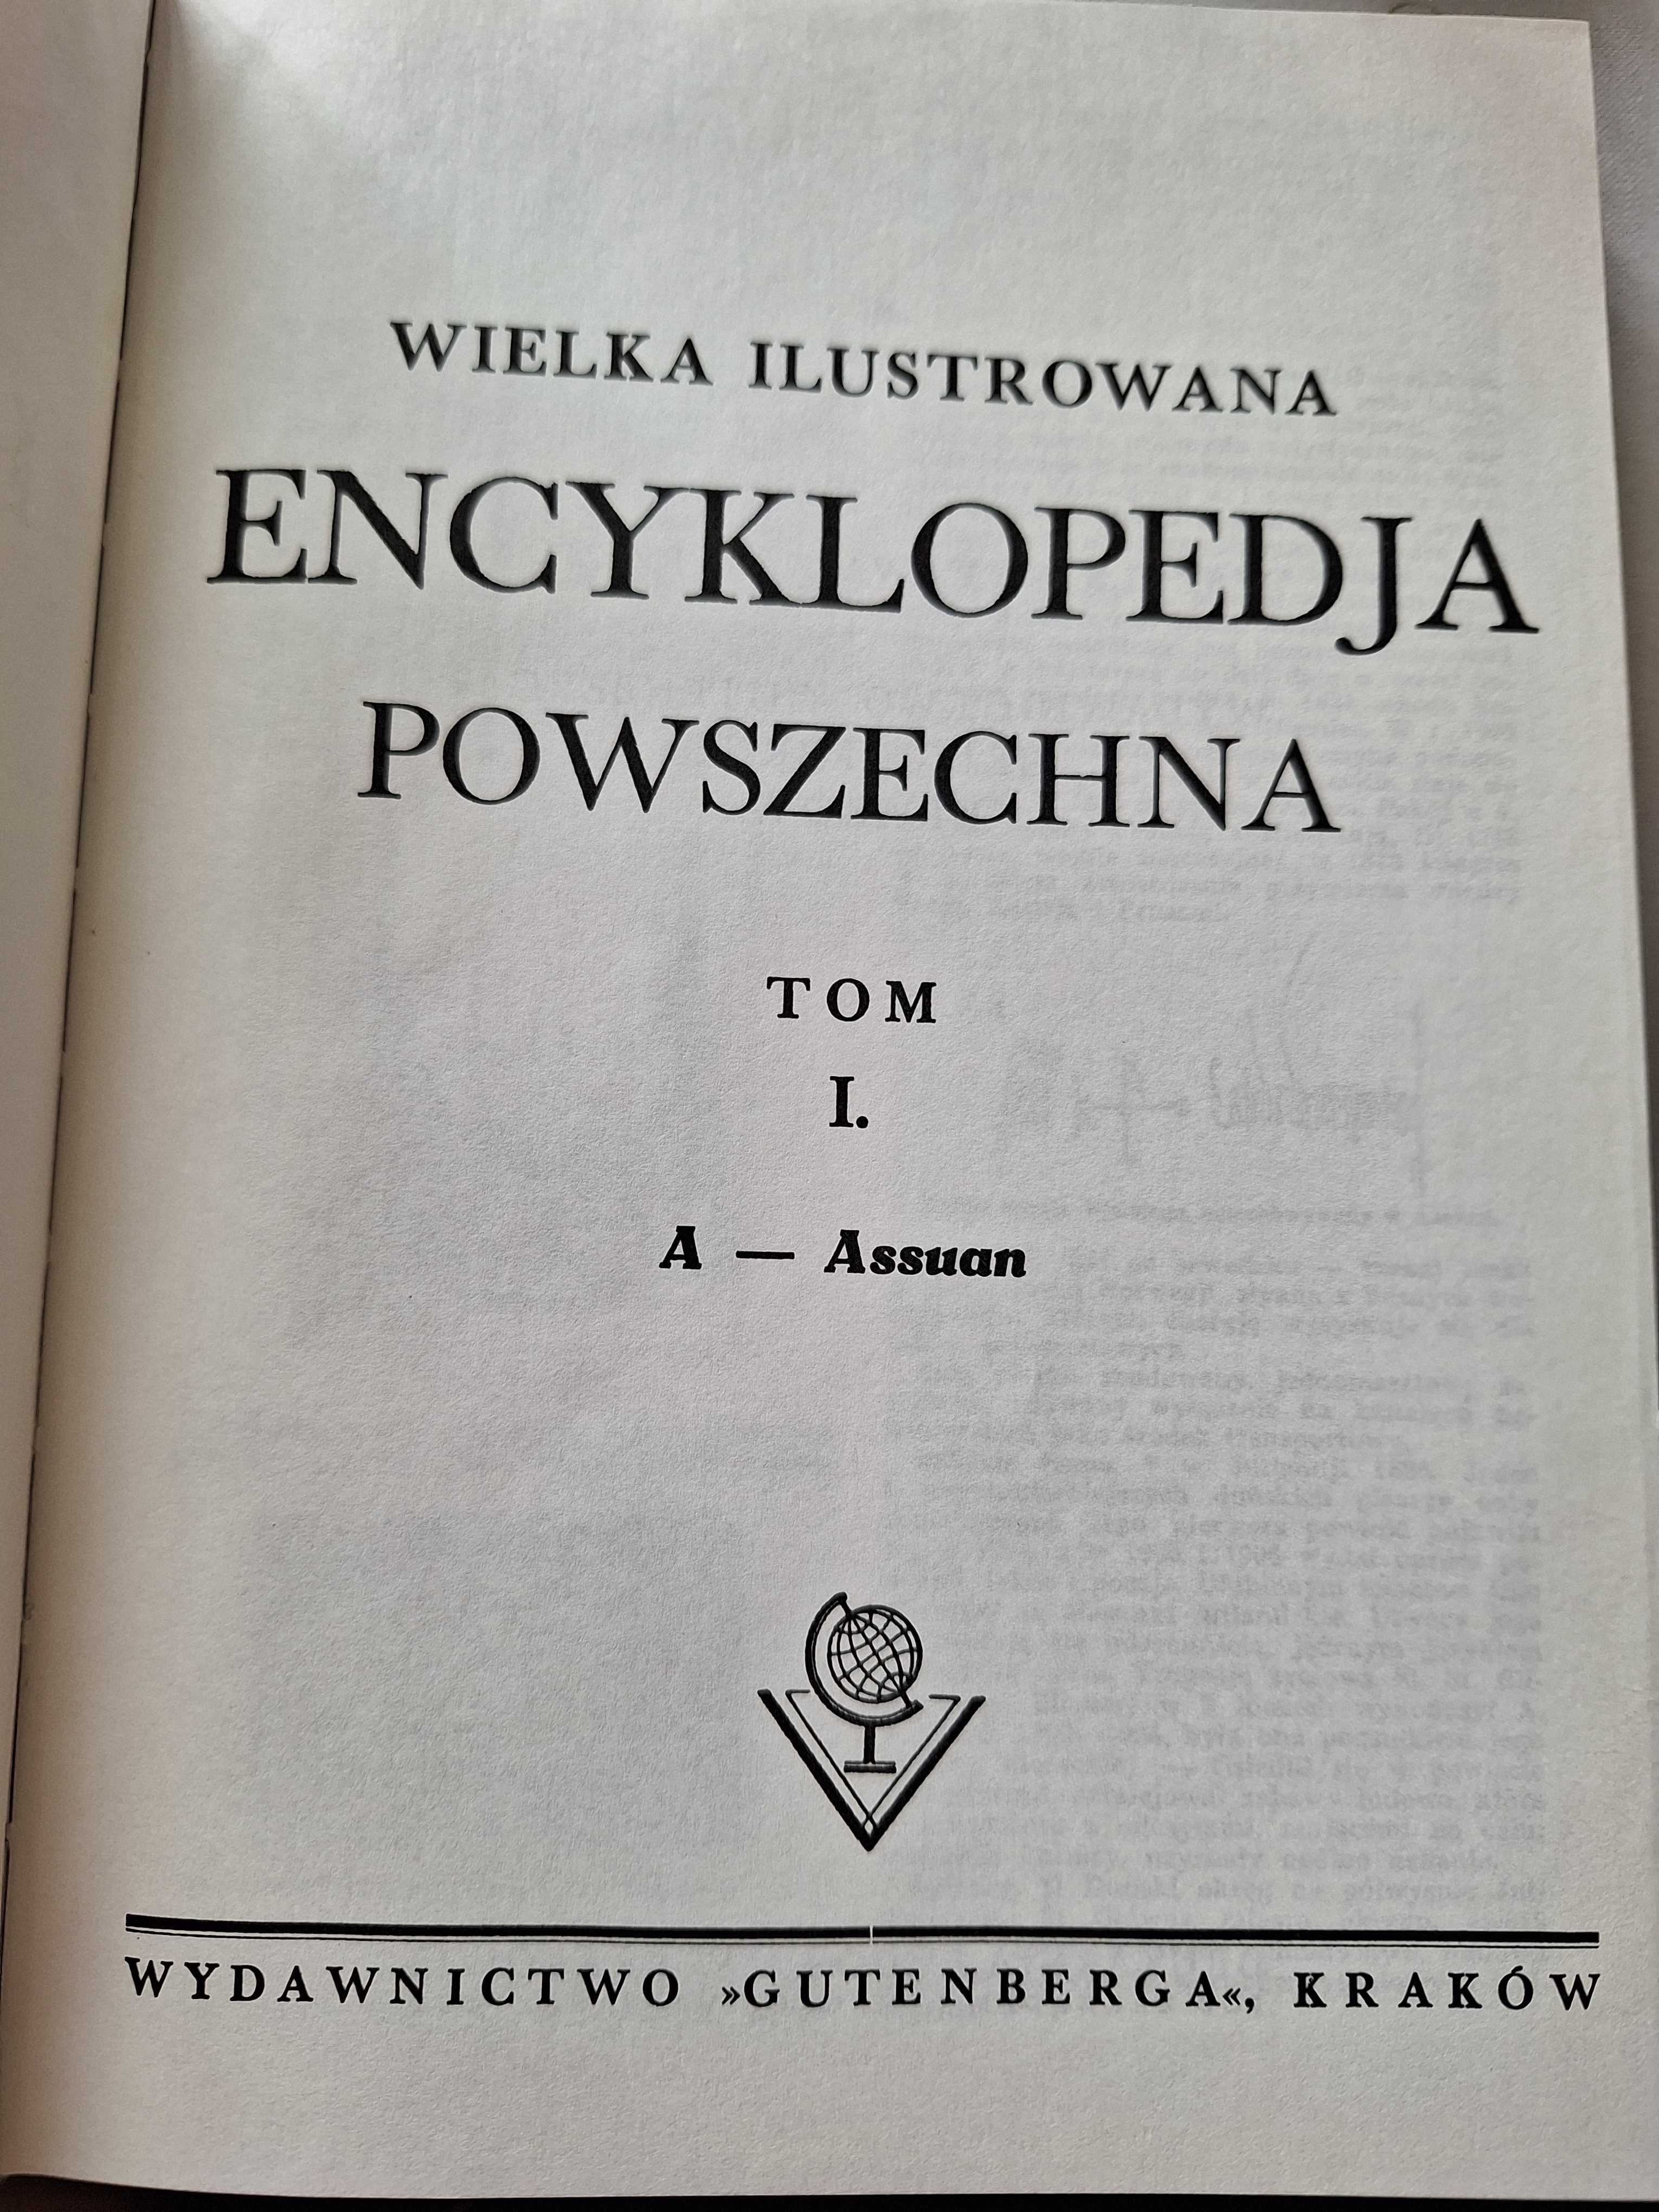 Encyklopedia Gutenberg 22 tomy